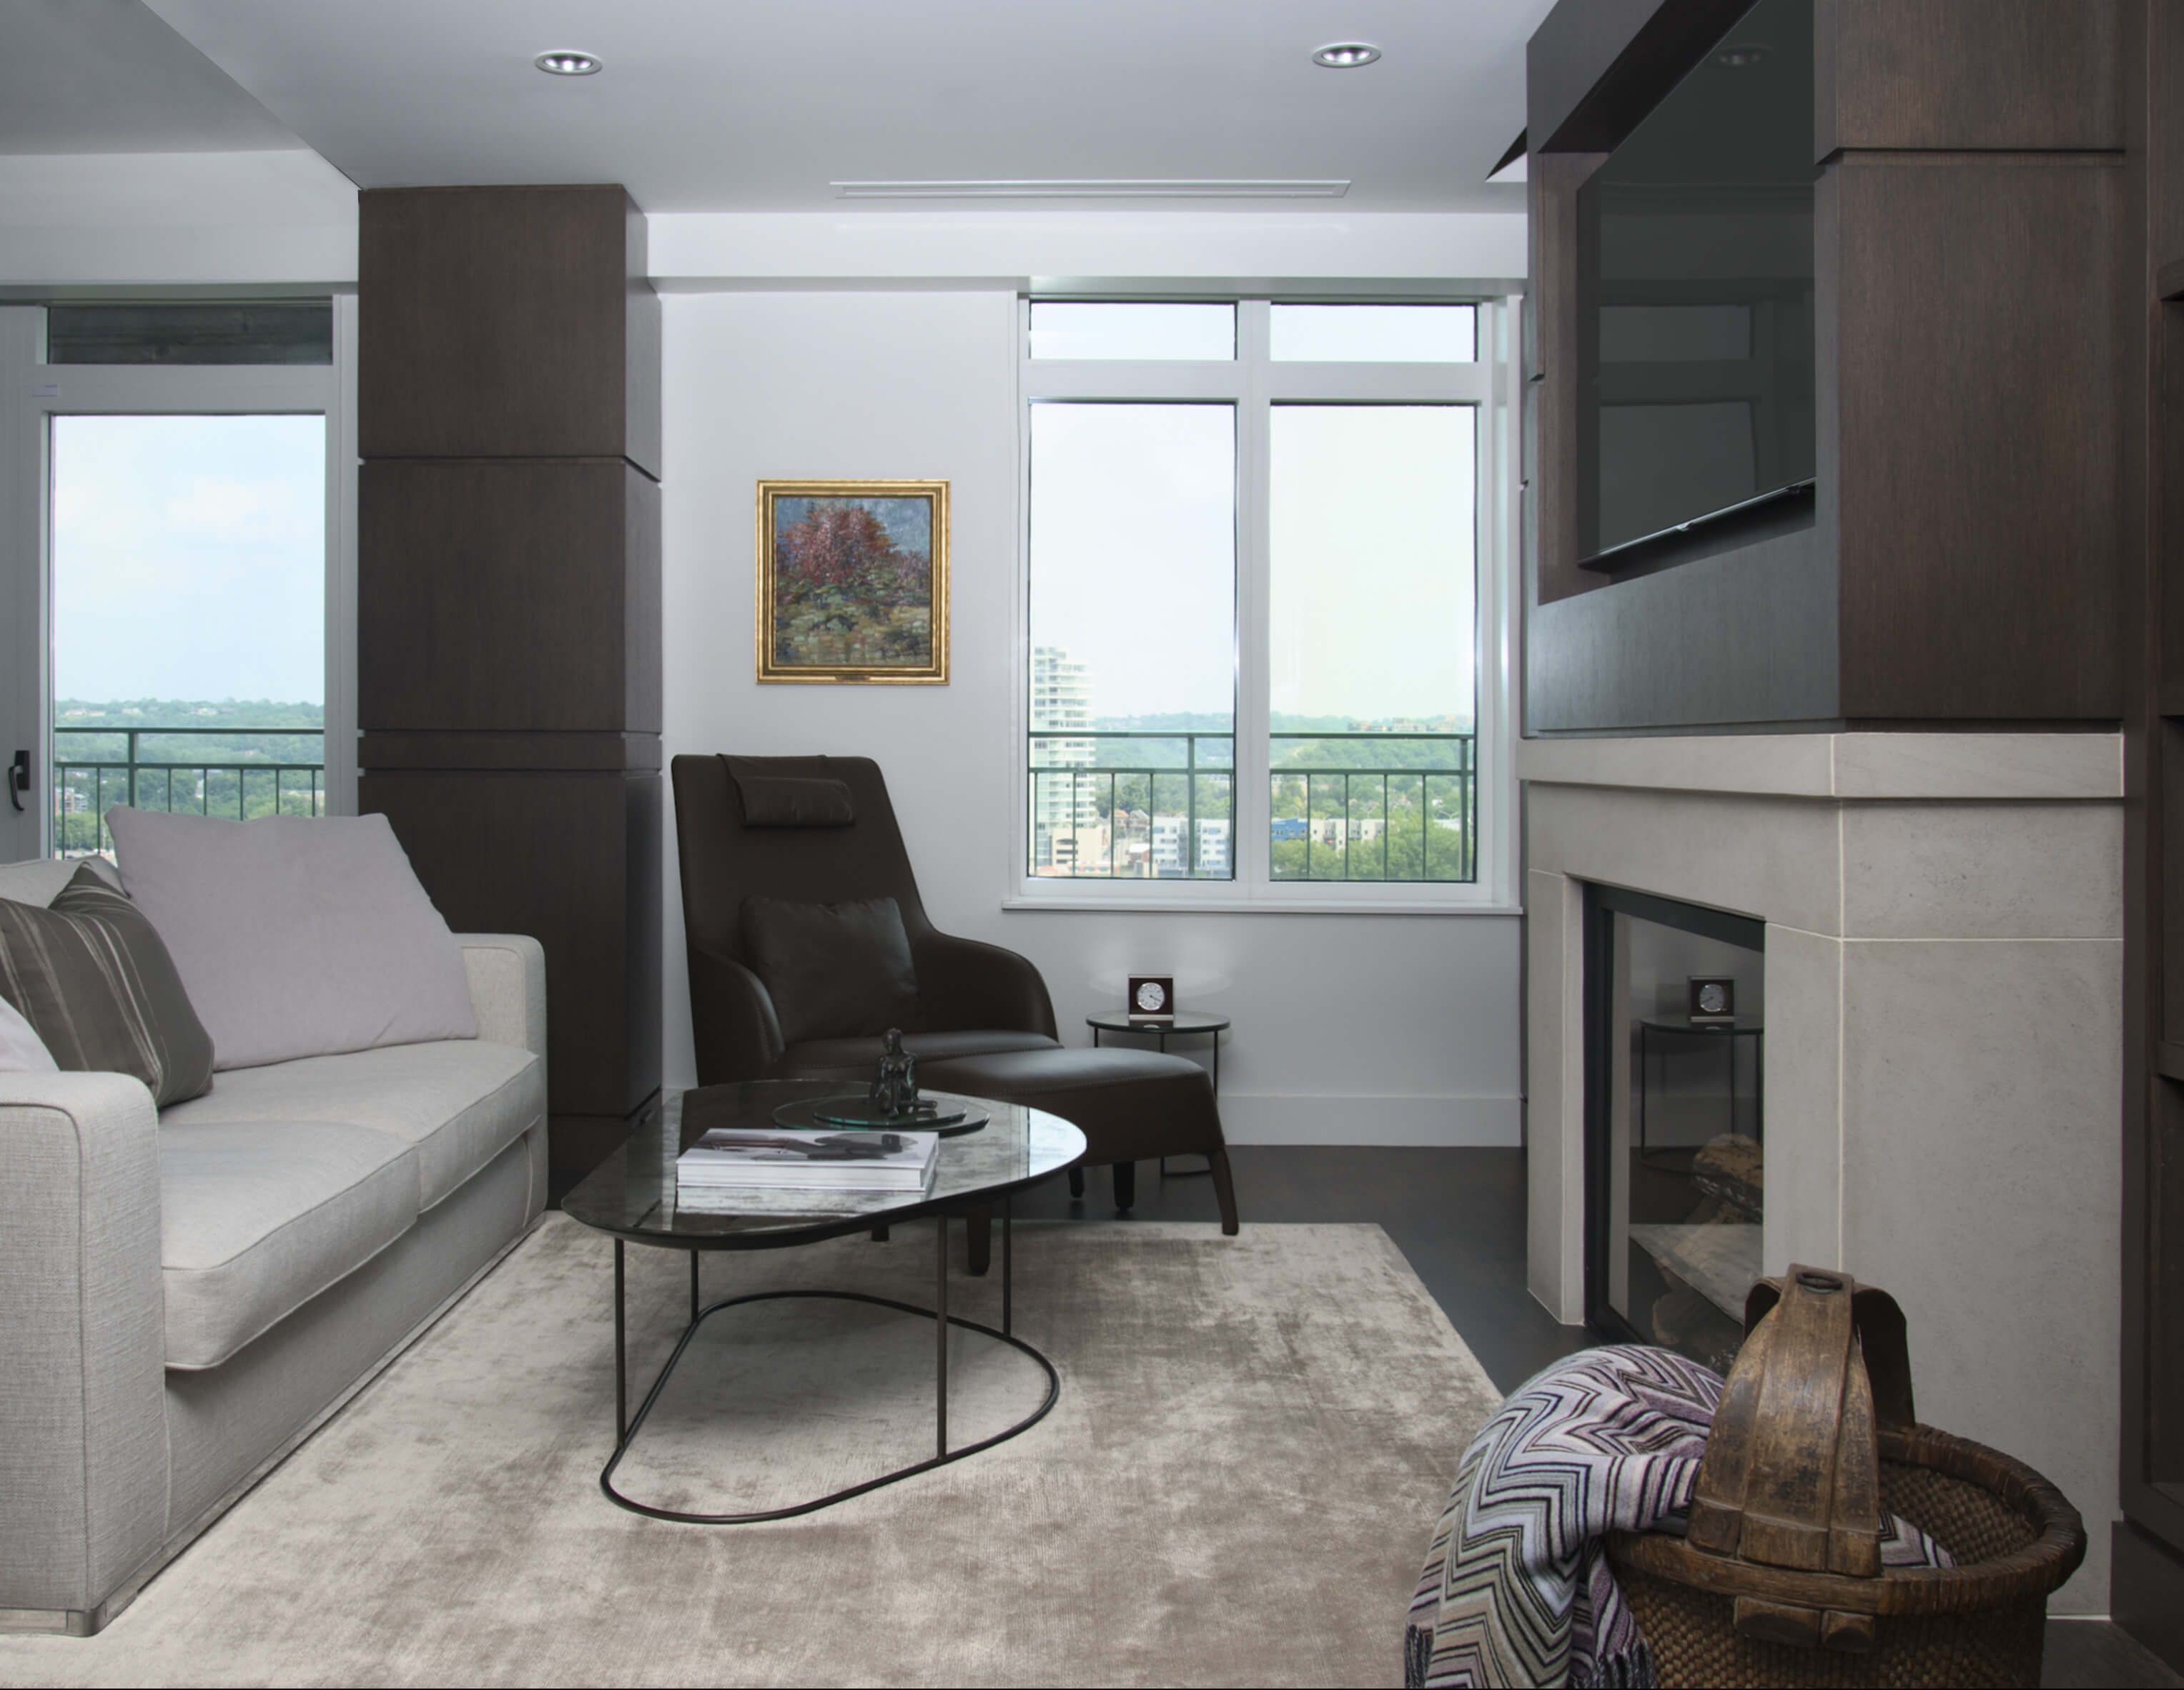 Modern and minimal living room designed by Interior Designer, RM Interiors.